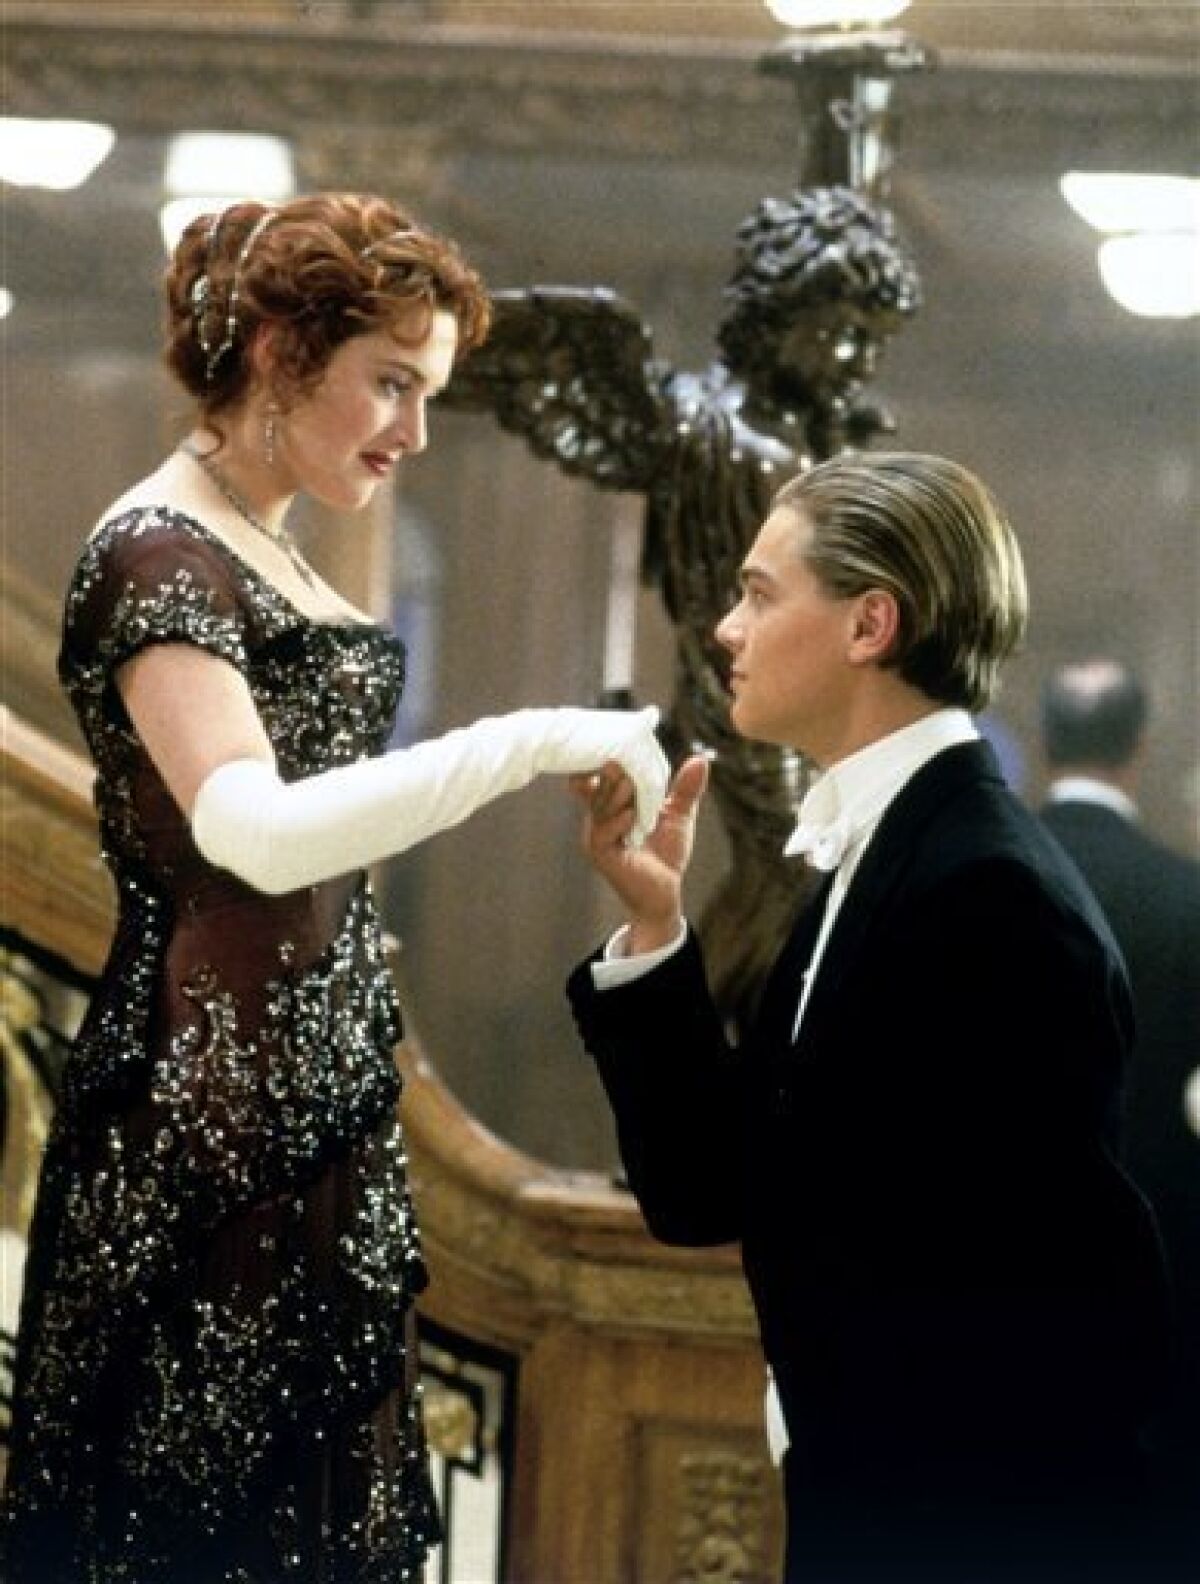 Titanic' duo DiCaprio and Winslet sail again - The San Diego Union-Tribune